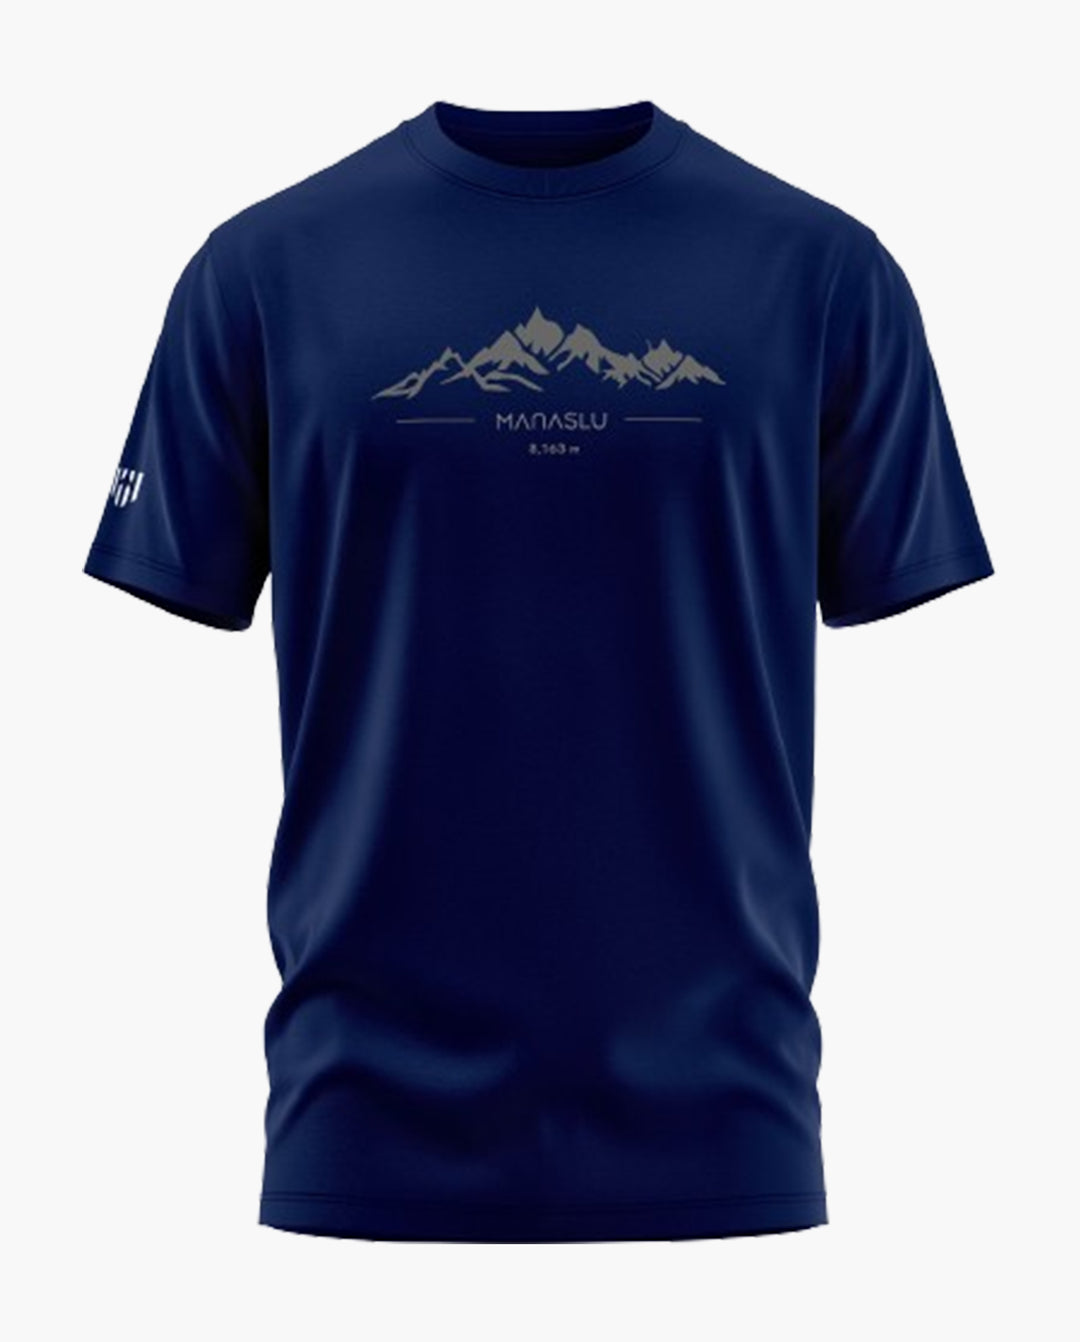 Manaslu Trekker T-Shirt